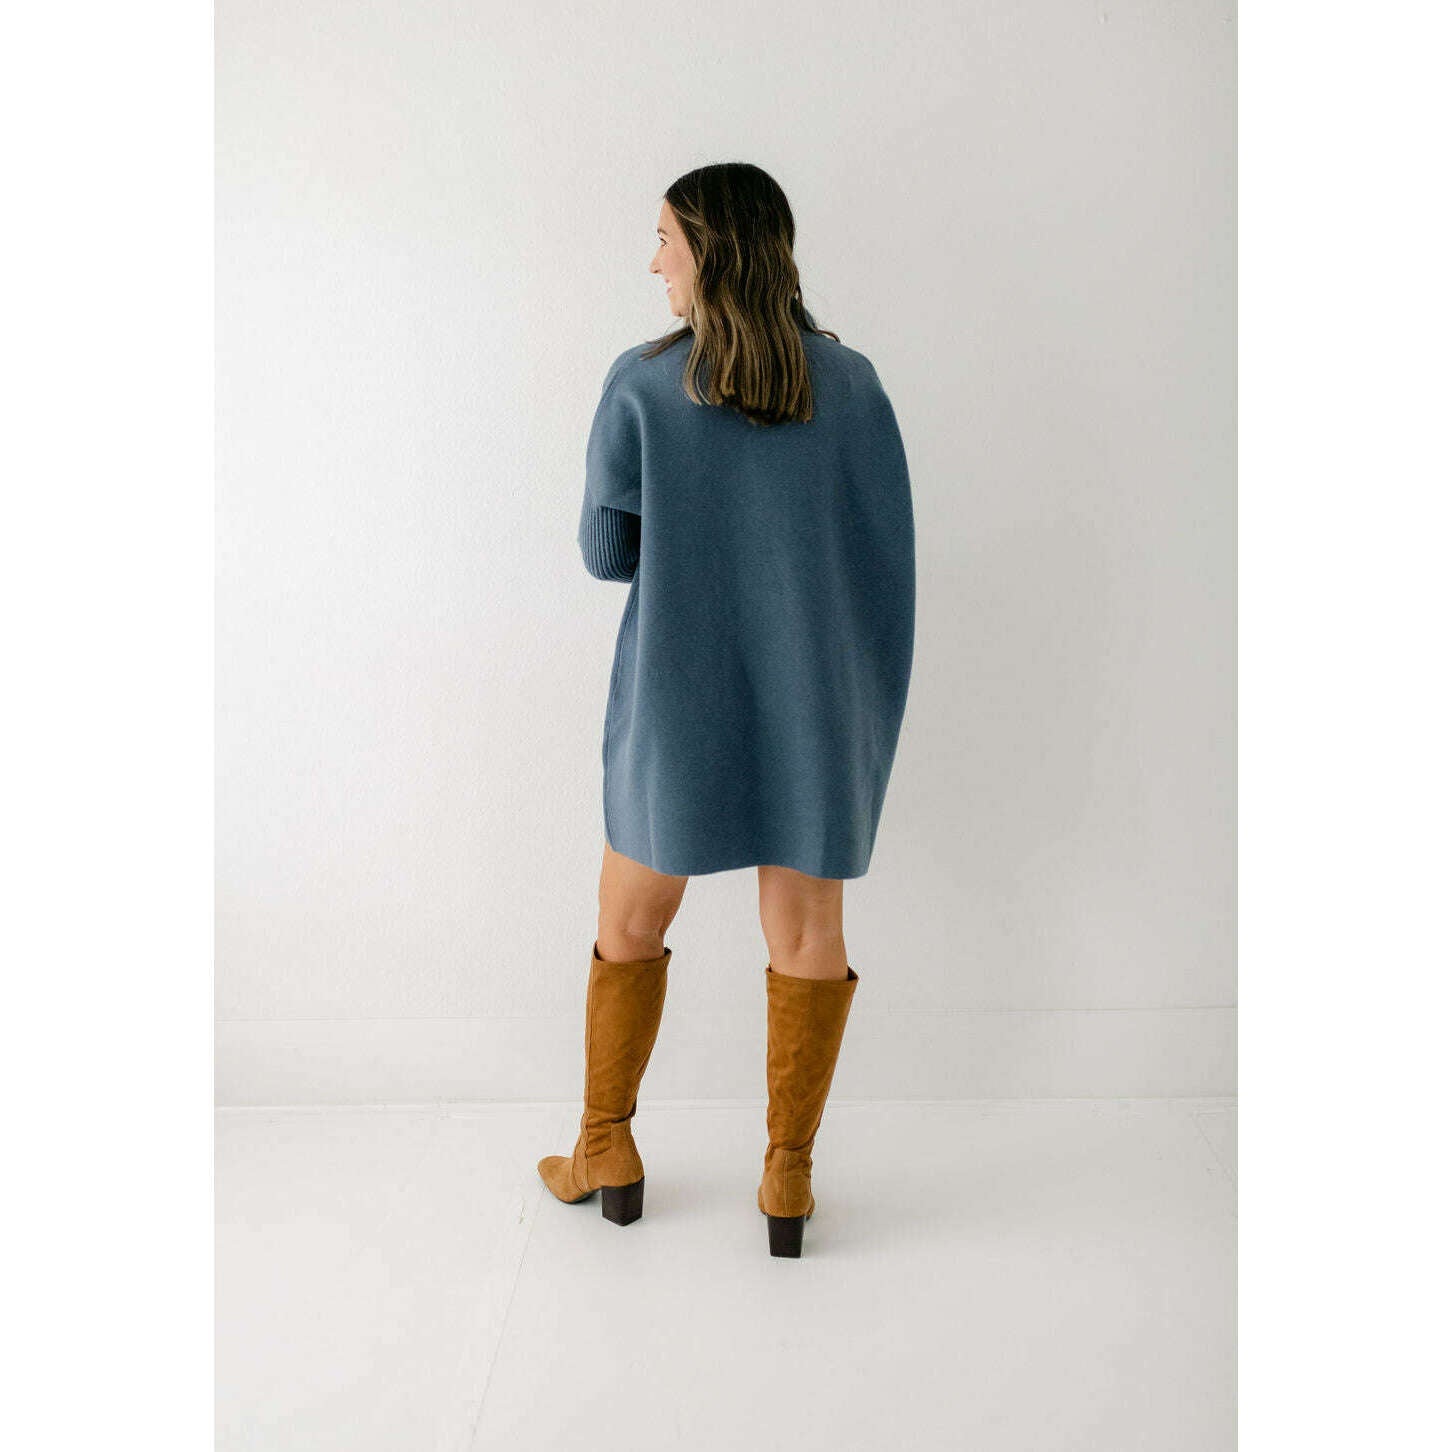 8.28 Boutique:Kerisma Knits,Kerisma Aja Sweater Dress in Stormy Blue,Dress